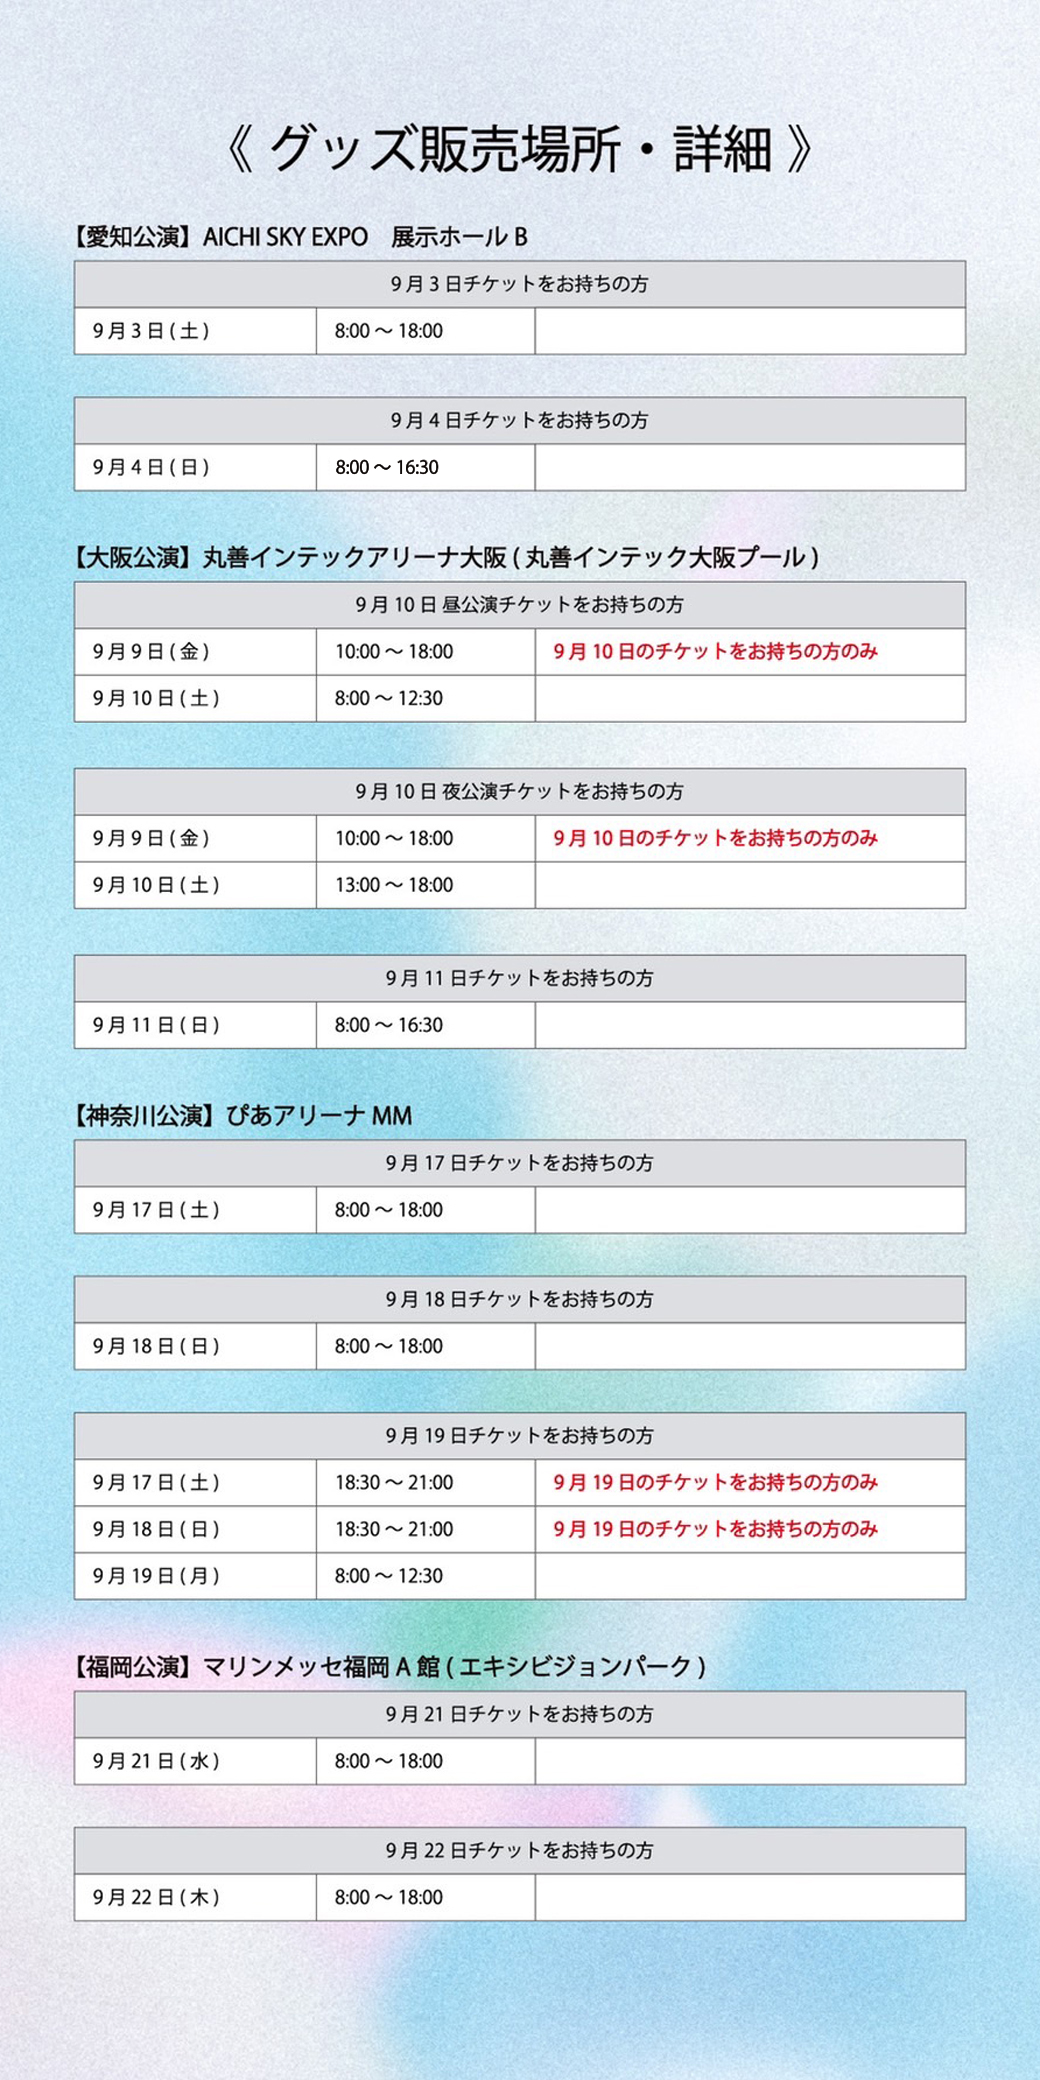 JO1 1ST ARENA LIVE TOUR 'KIZUNA'グッズ購入整理券についての